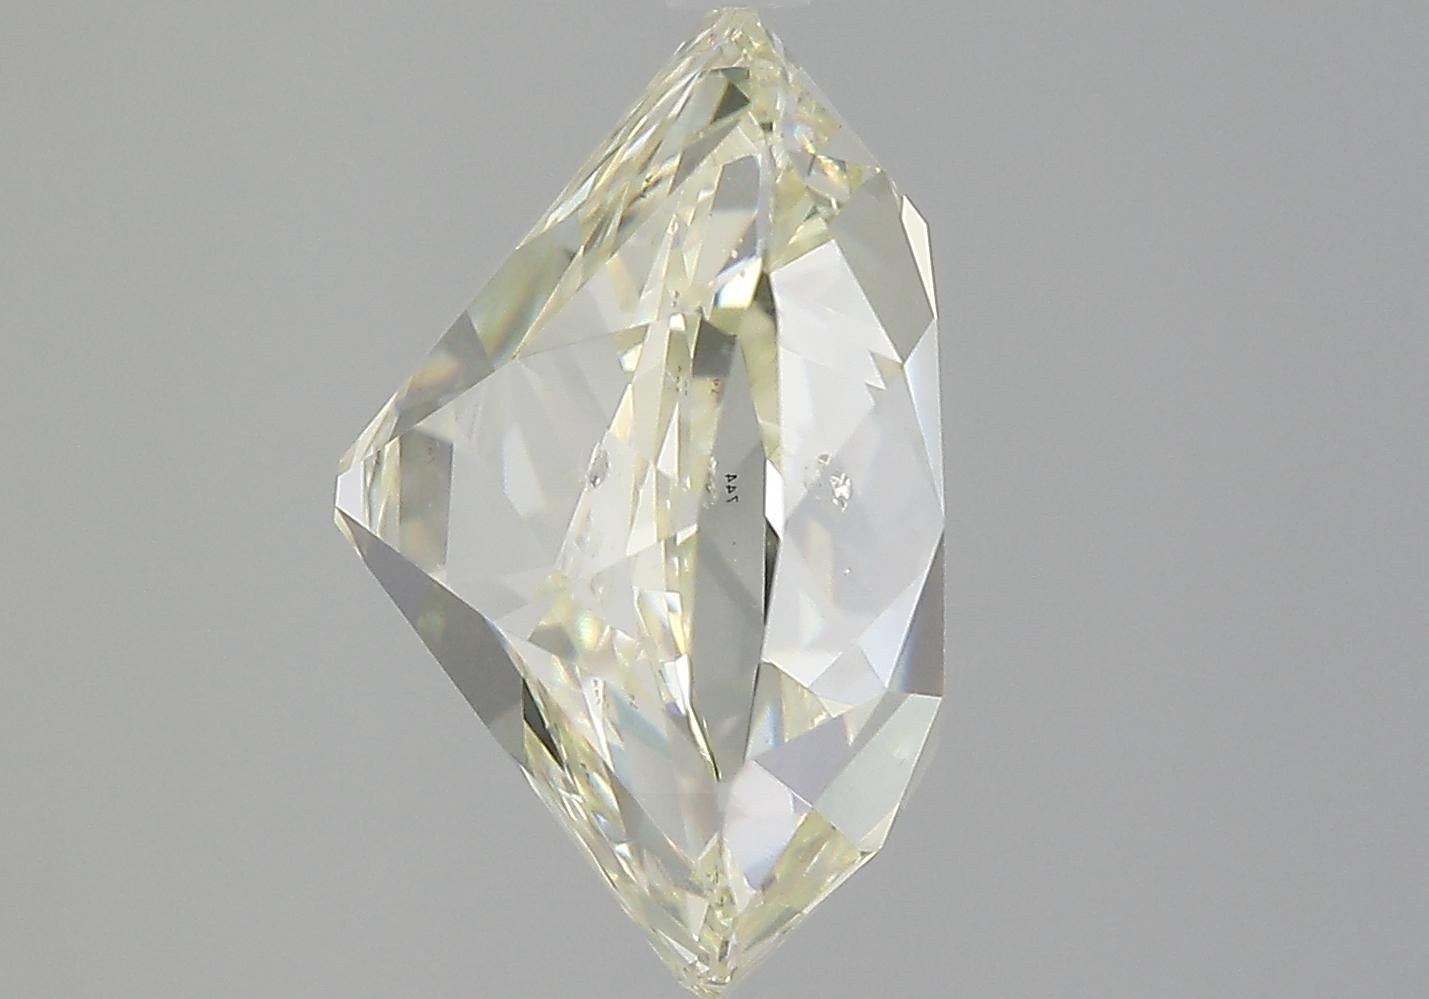 ITEM DESCRIPTION

ID #: NYC57282
Stone Shape: Modified Rectangular Brilliant
Diamond Weight: 10.08 carat
Clarity: SI2
Color: W to X Range
Cut:	Excellent
Measurements: 13.90 x 11.42 x 8.37 mm
Depth %: 73.3%
Table %: 	64%
Symmetry: Fair
Polish: